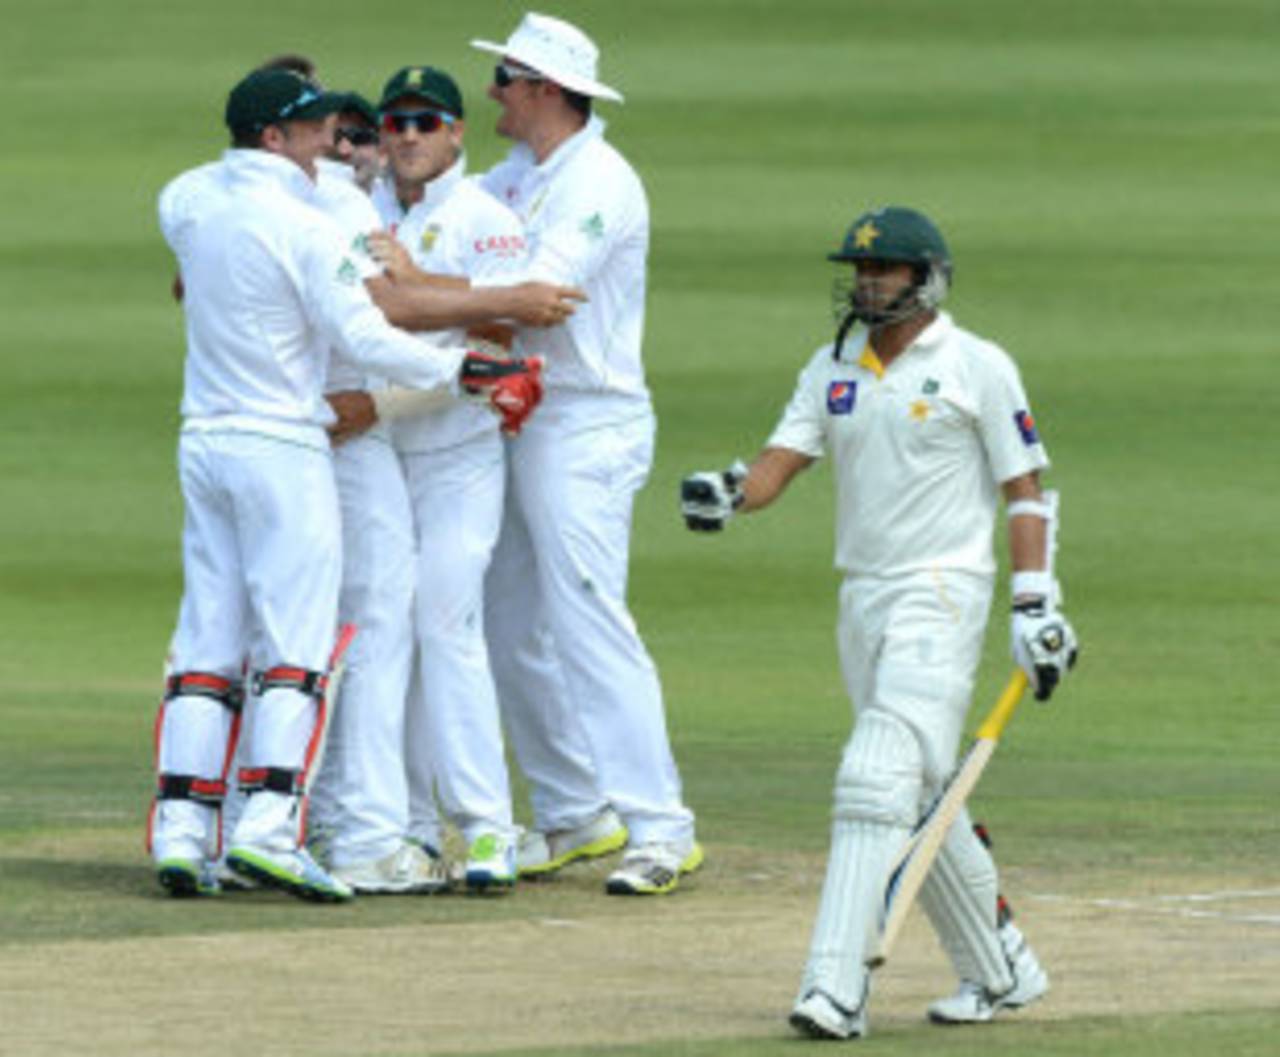 Azhar Ali was lbw to Jacques Kallis for 18, South Africa v Pakistan, 1st Test, Johannesburg, 3rd day, February 3, 2013